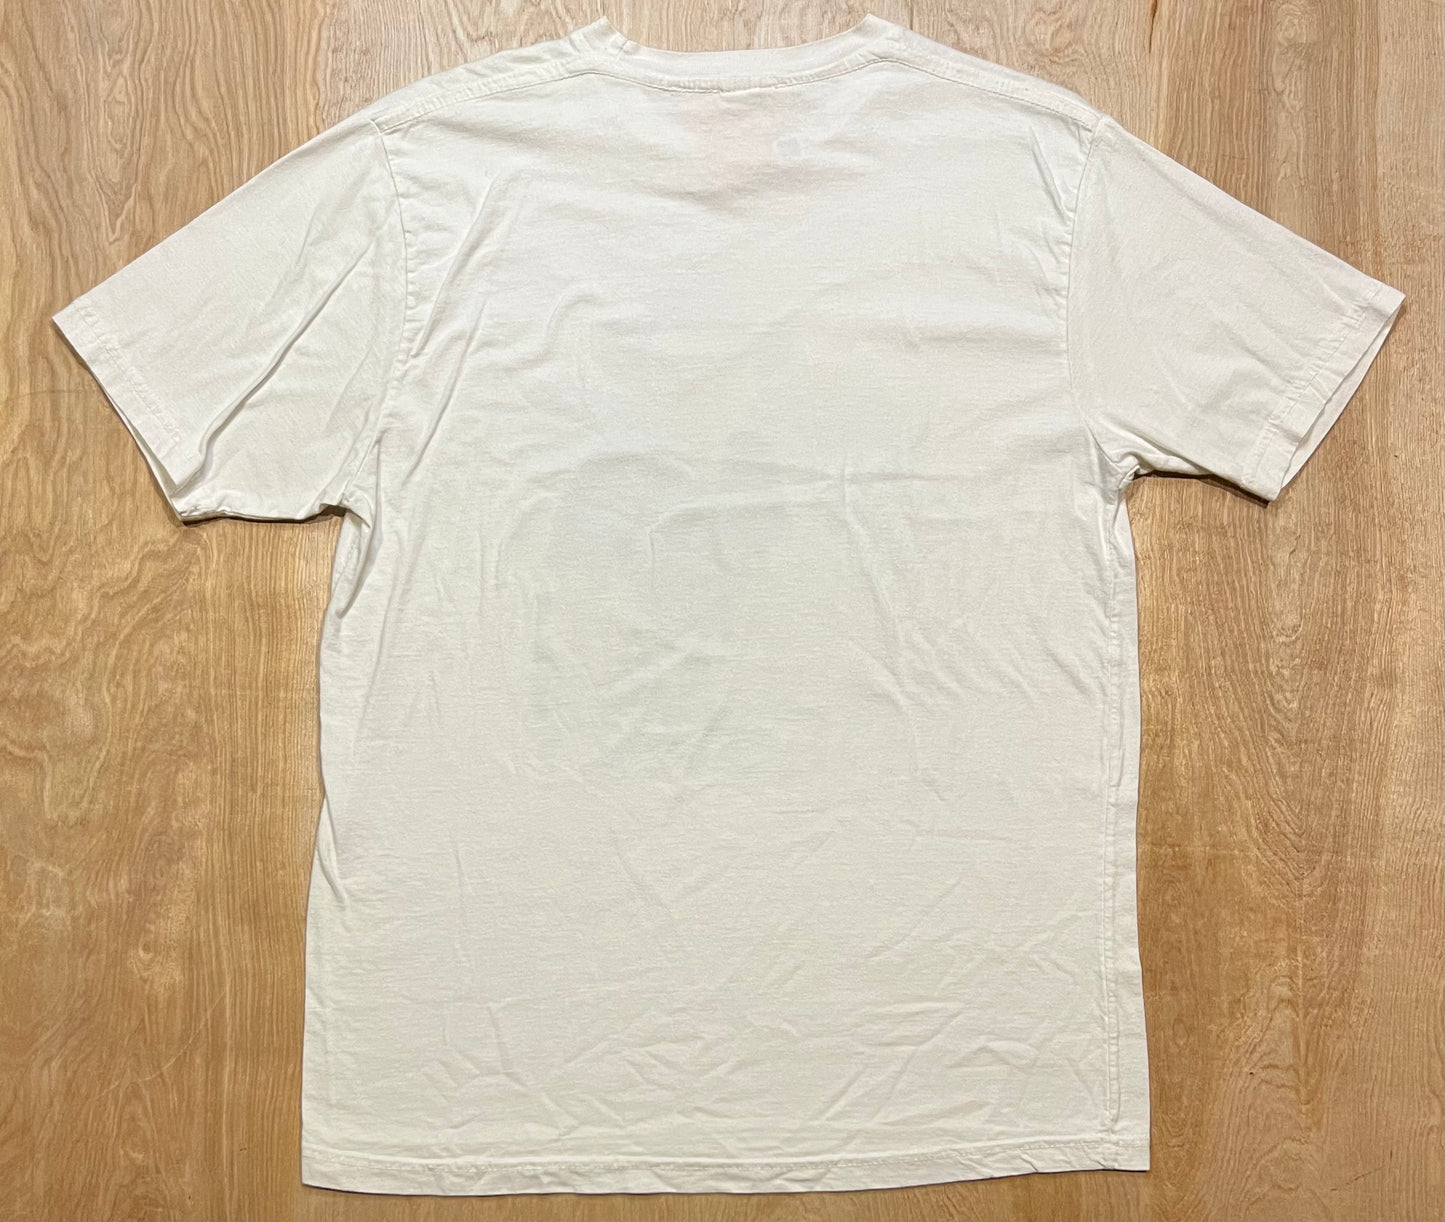 2007 Kenny Chesney Tour T-Shirt